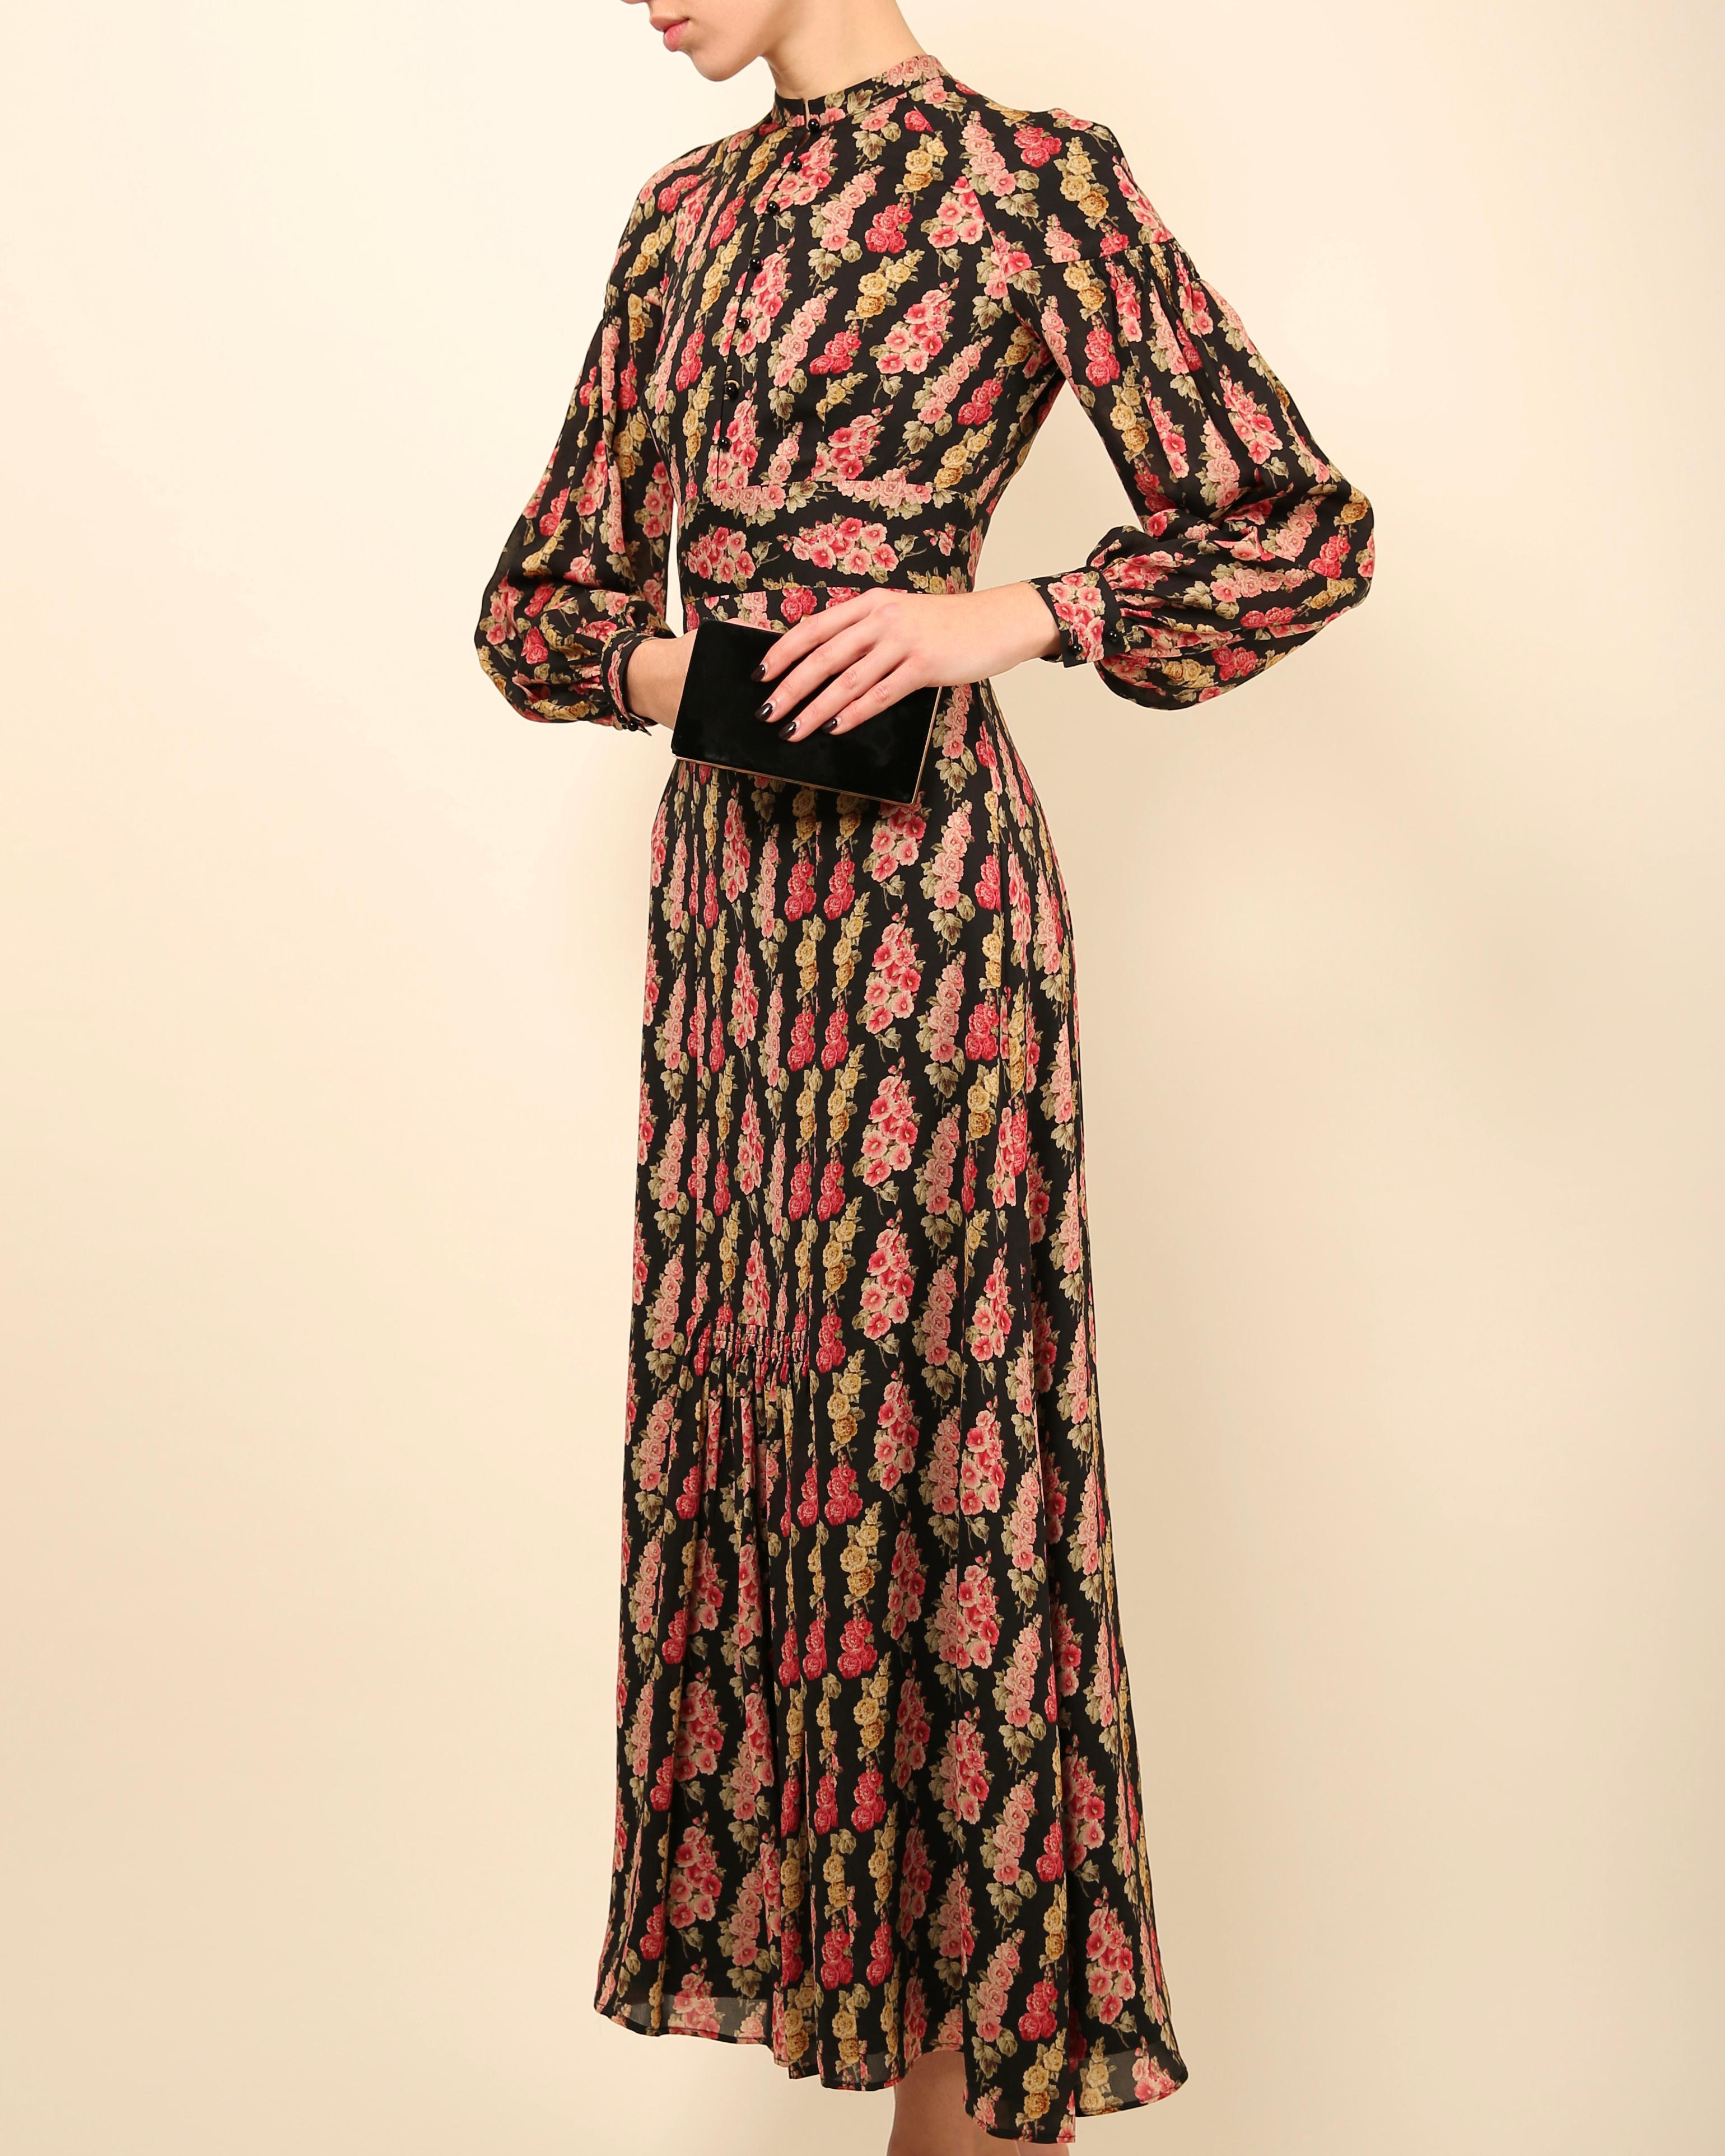 Vilshenko black pink floral print silk puff sleeve mock neck maxi dress XS - S For Sale 1